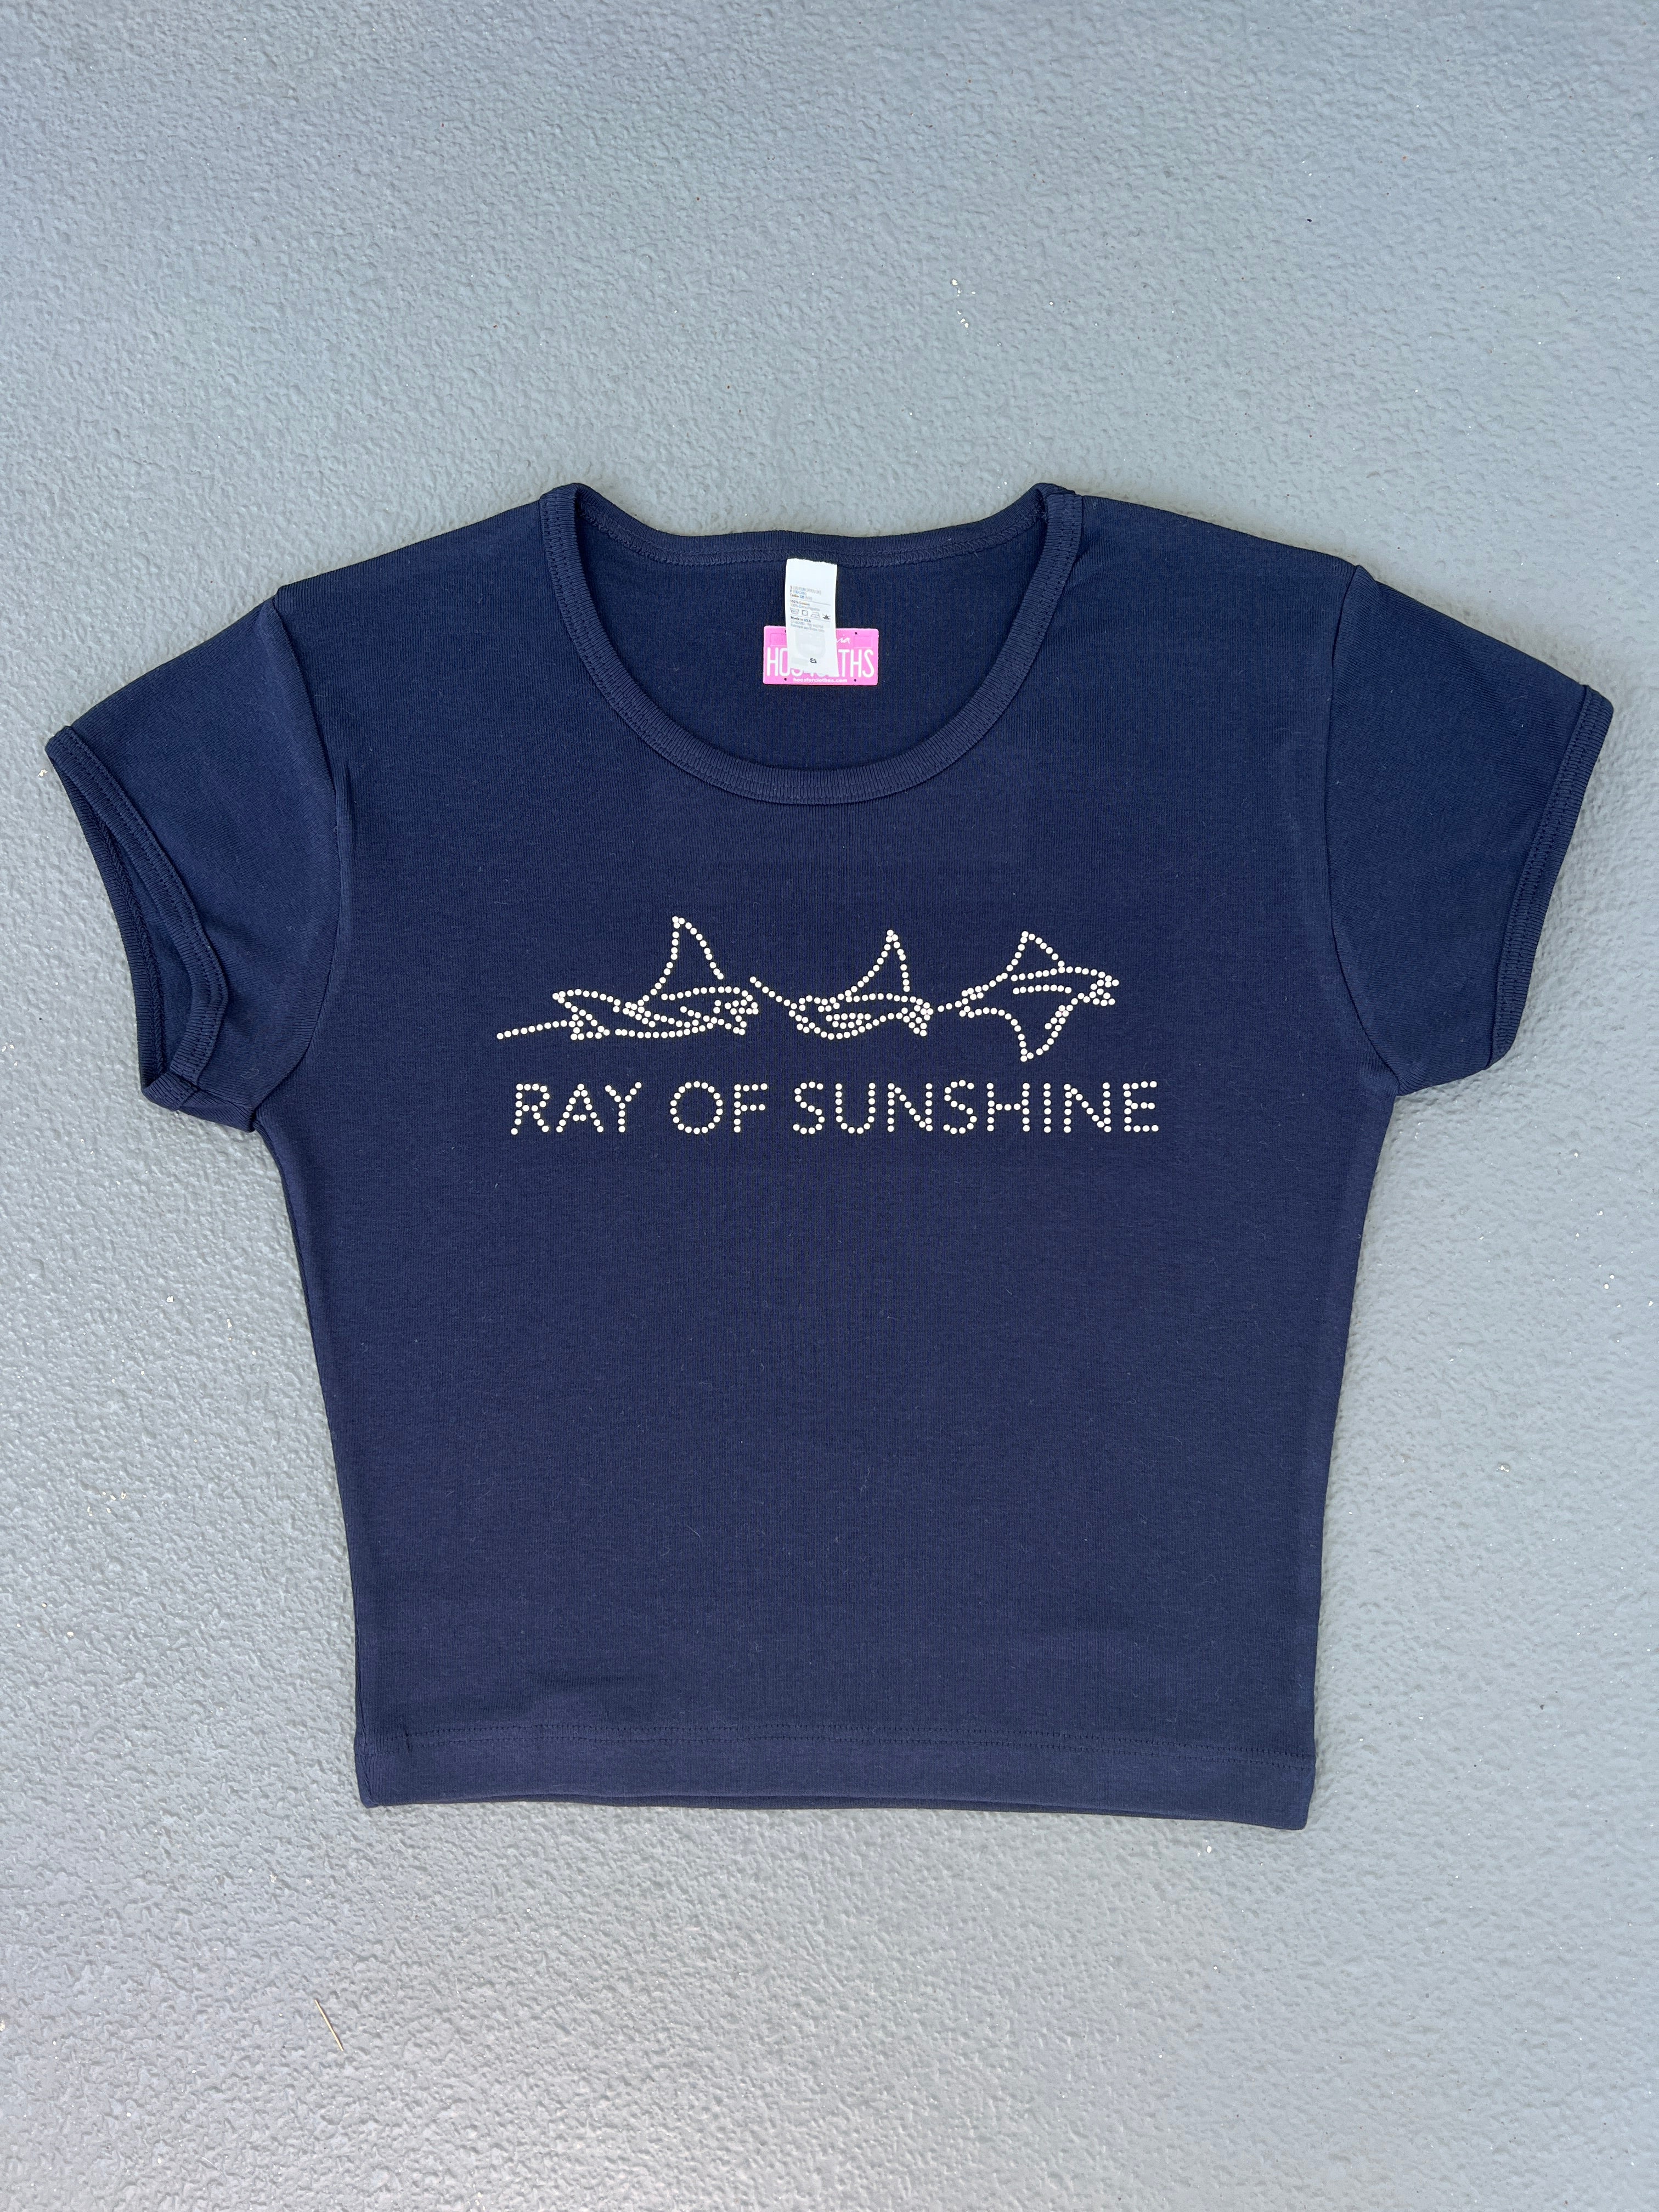 "ray of sunshine" baby tee